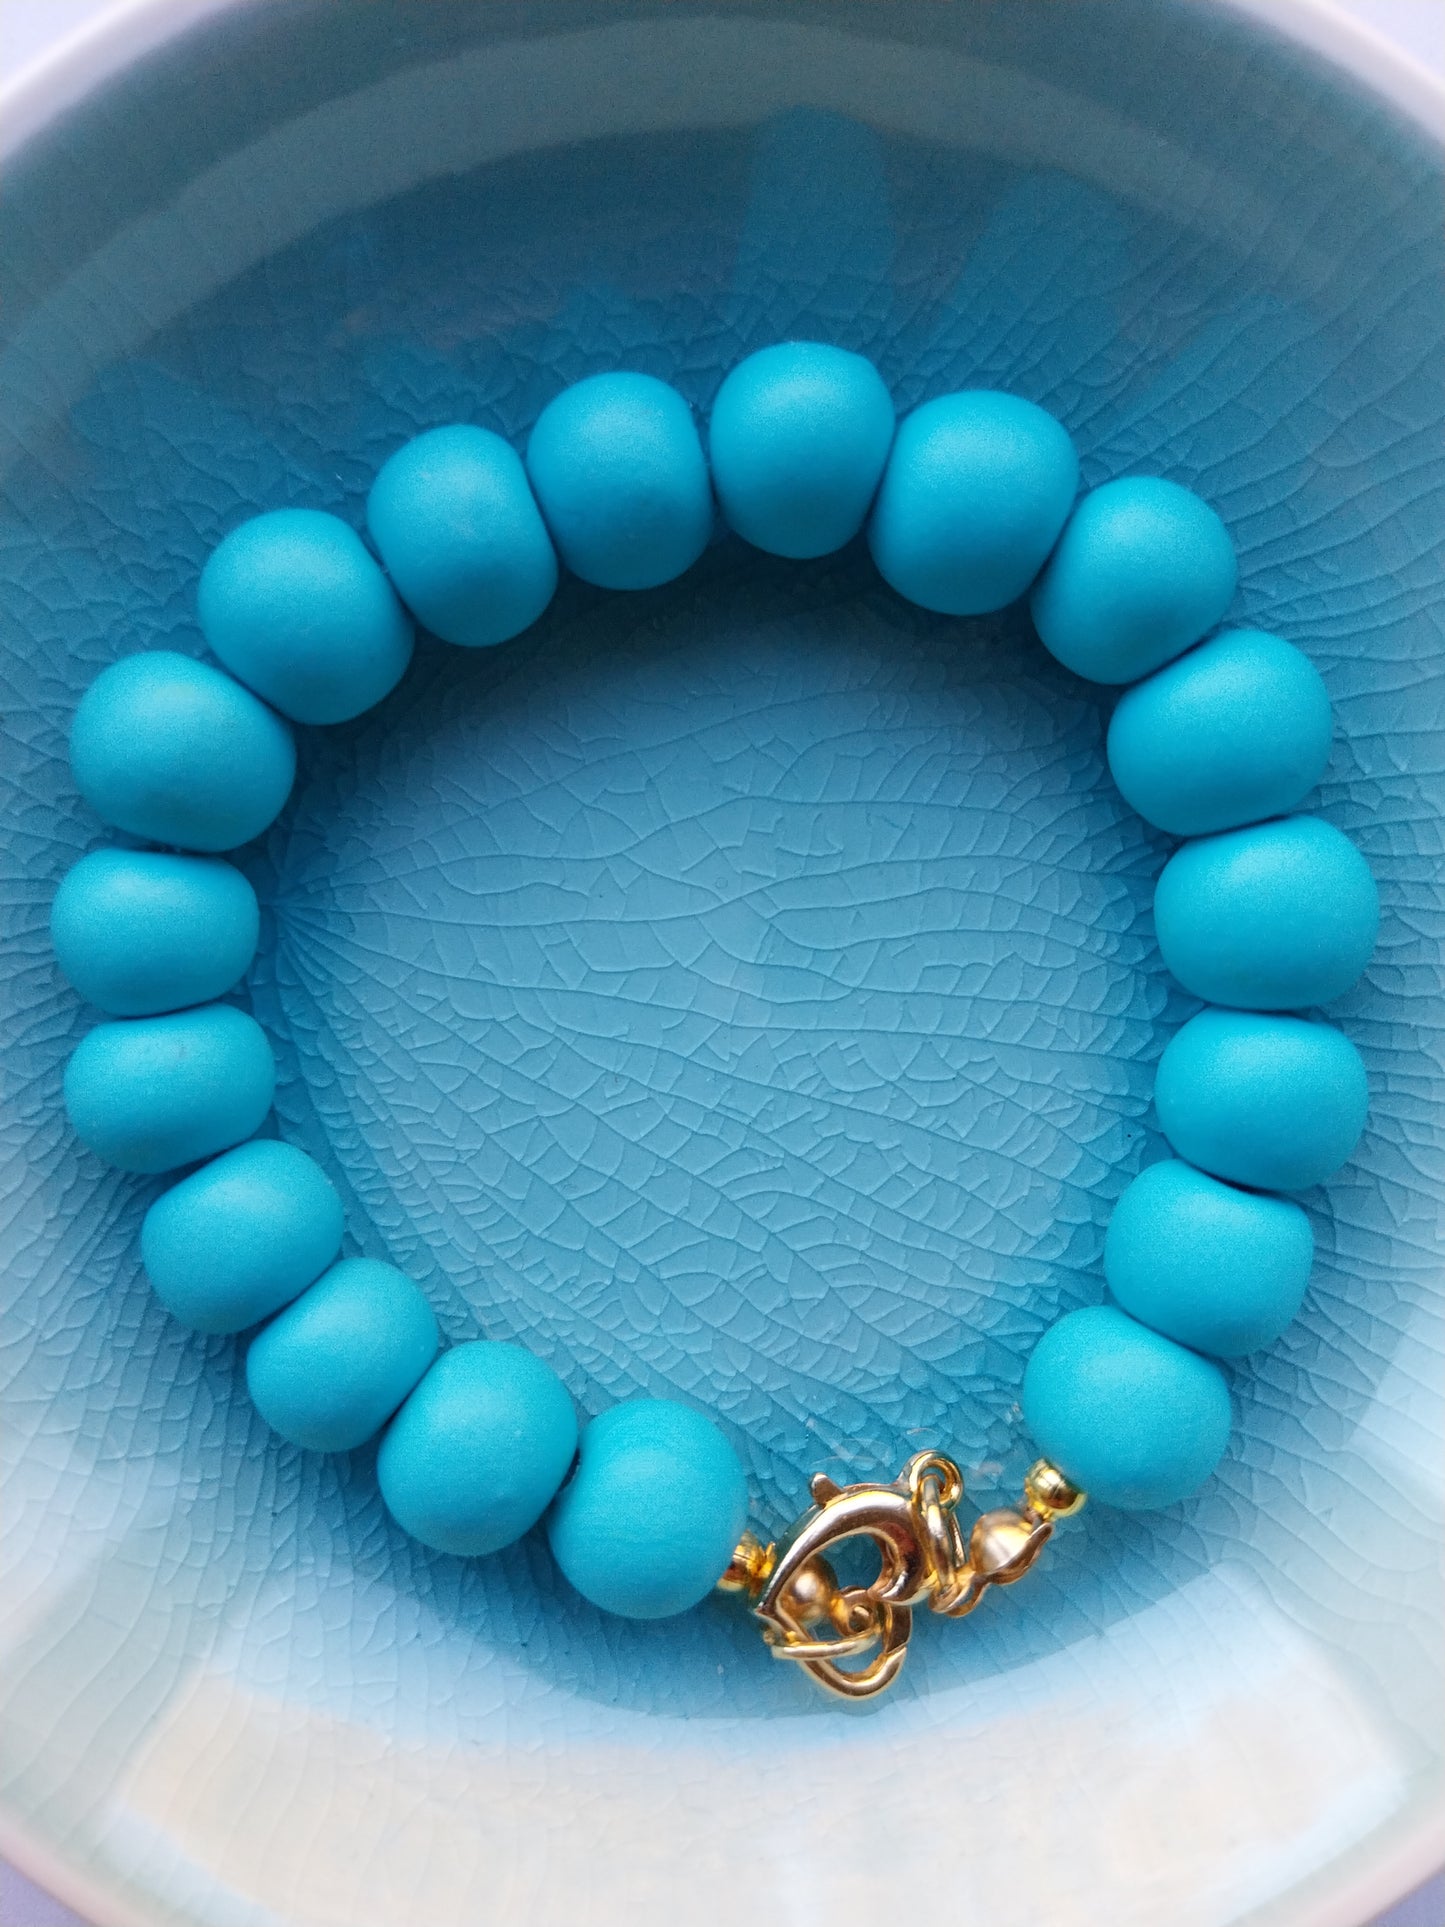 Clay bead bracelet in turquoise